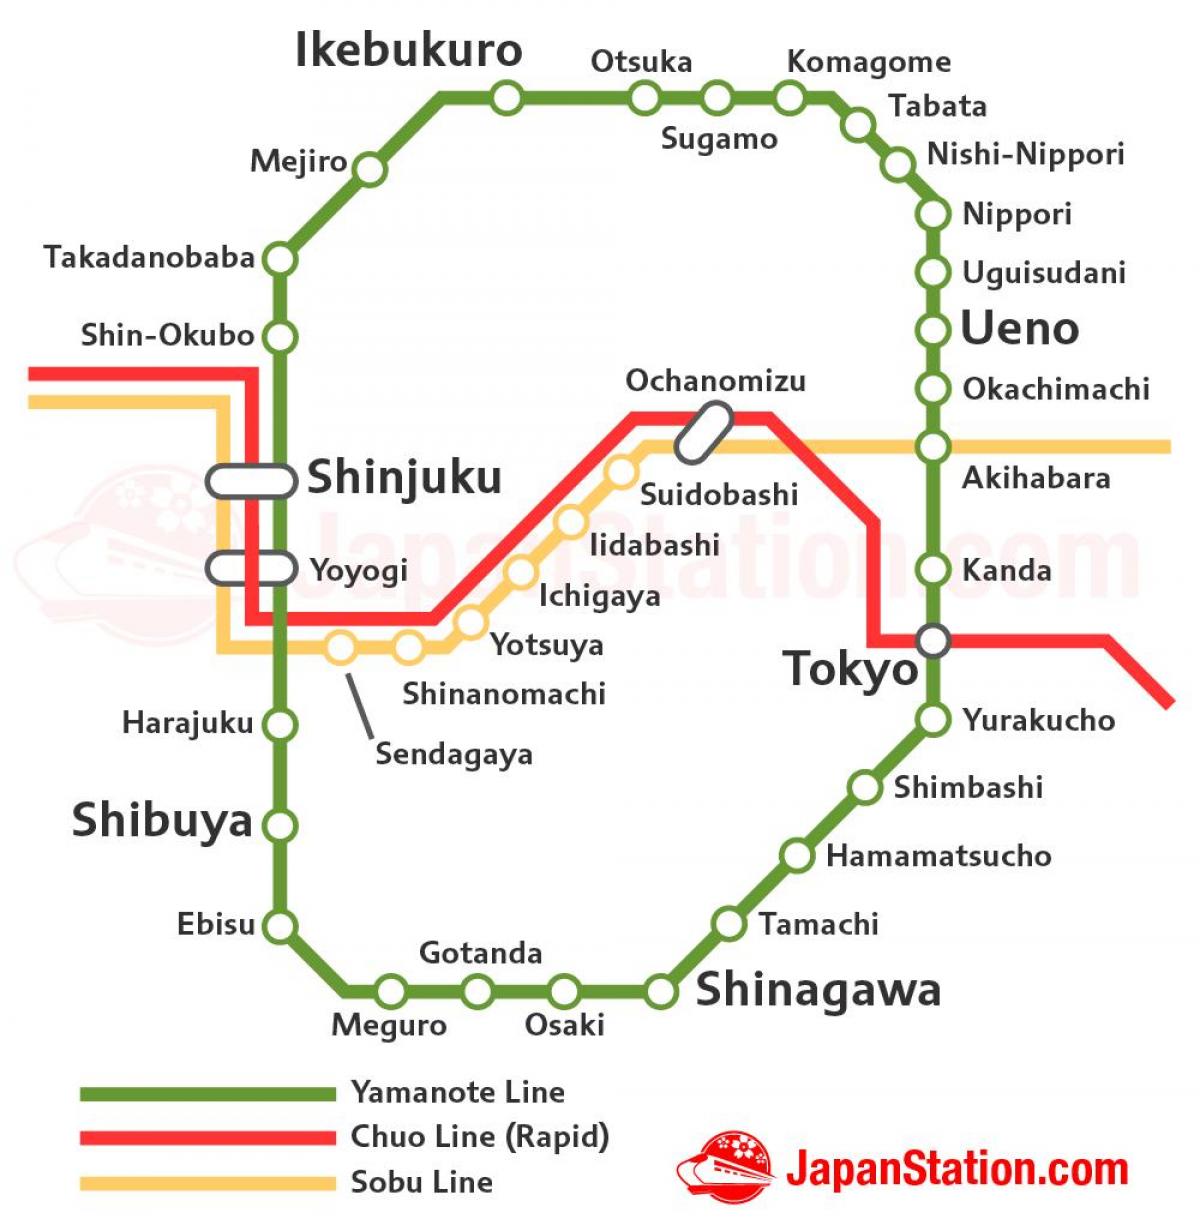 Tokyo JR carte de la ligne